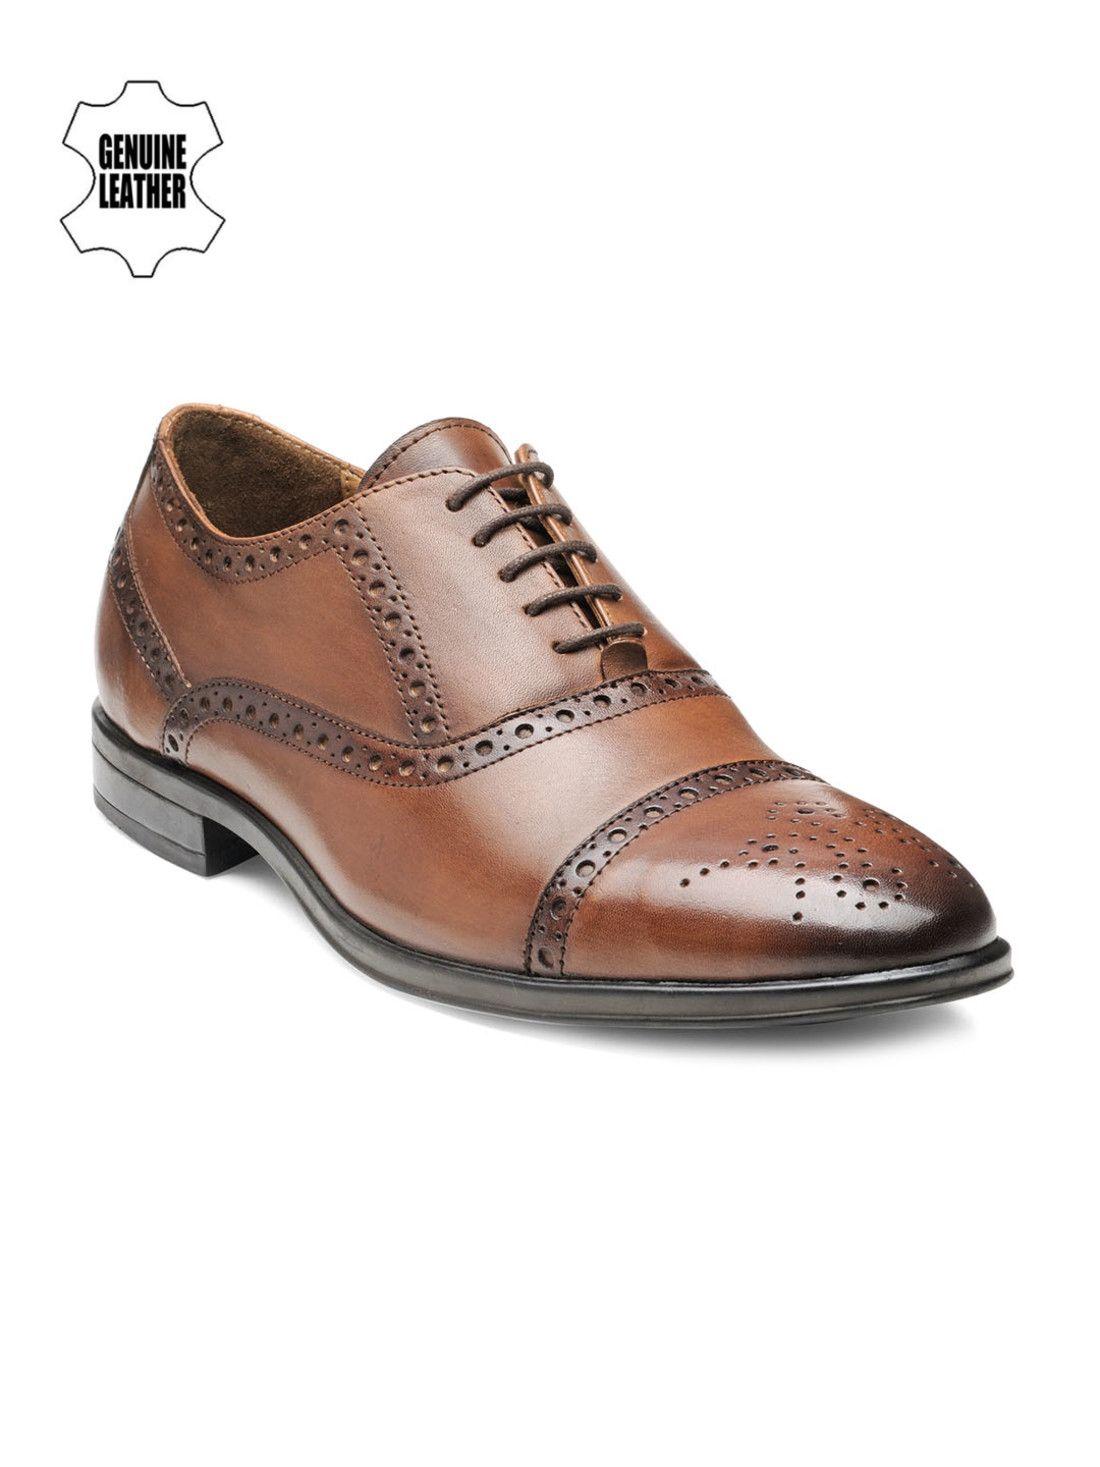 teakwood leathers men brown leather formal shoes